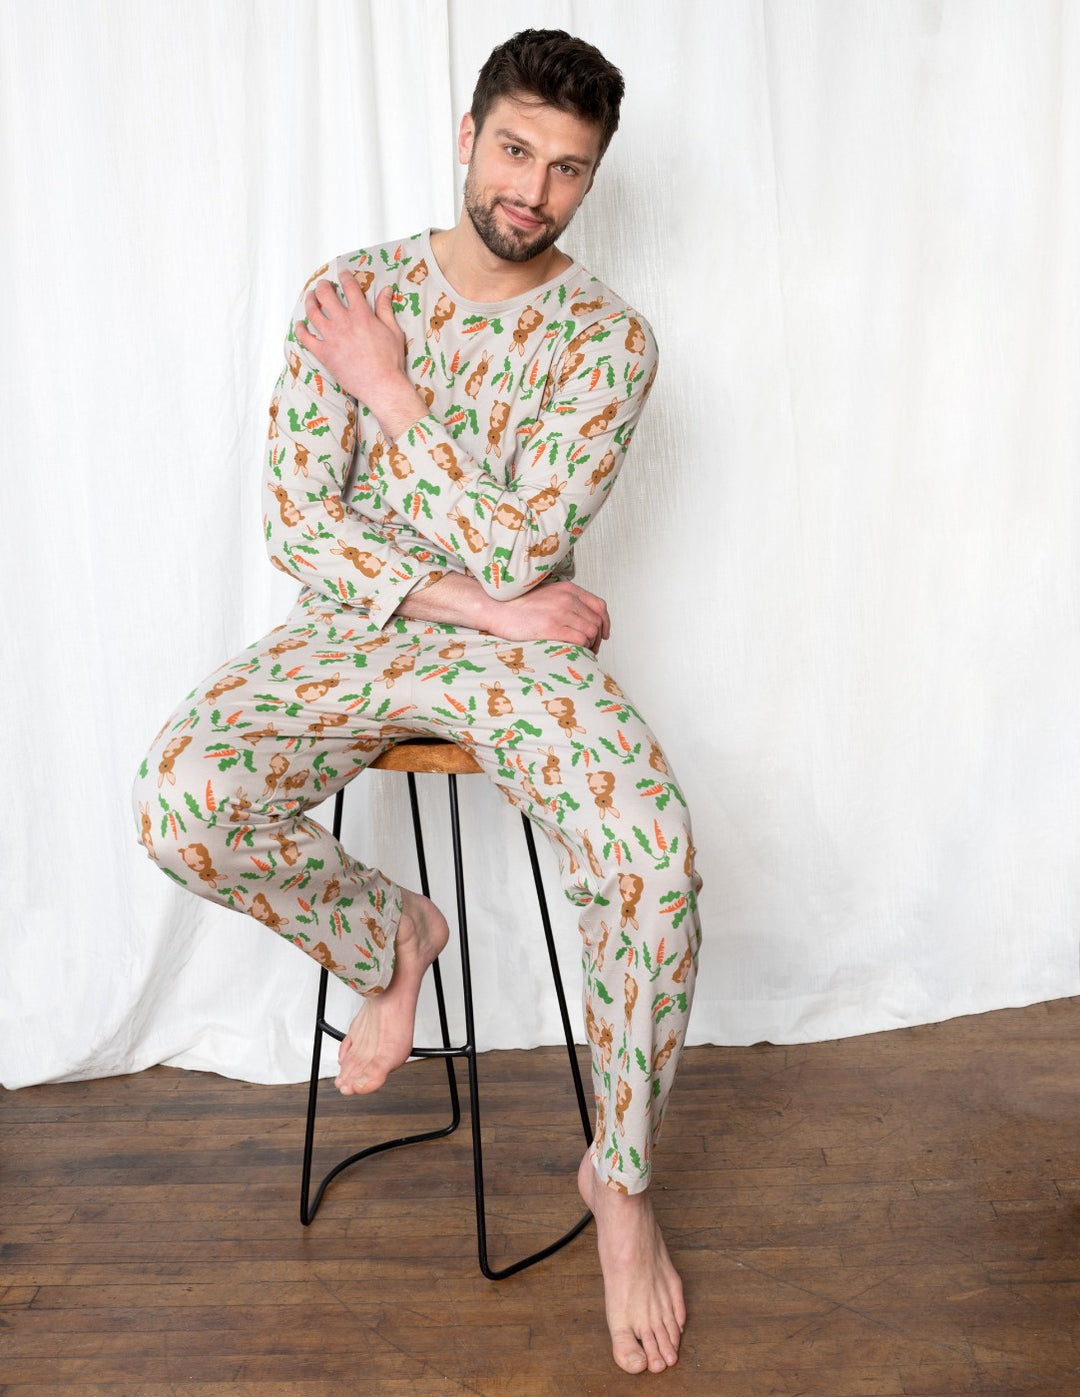 Wholesale High Quality Custom Soft Pajama Bottom Lounge Pants